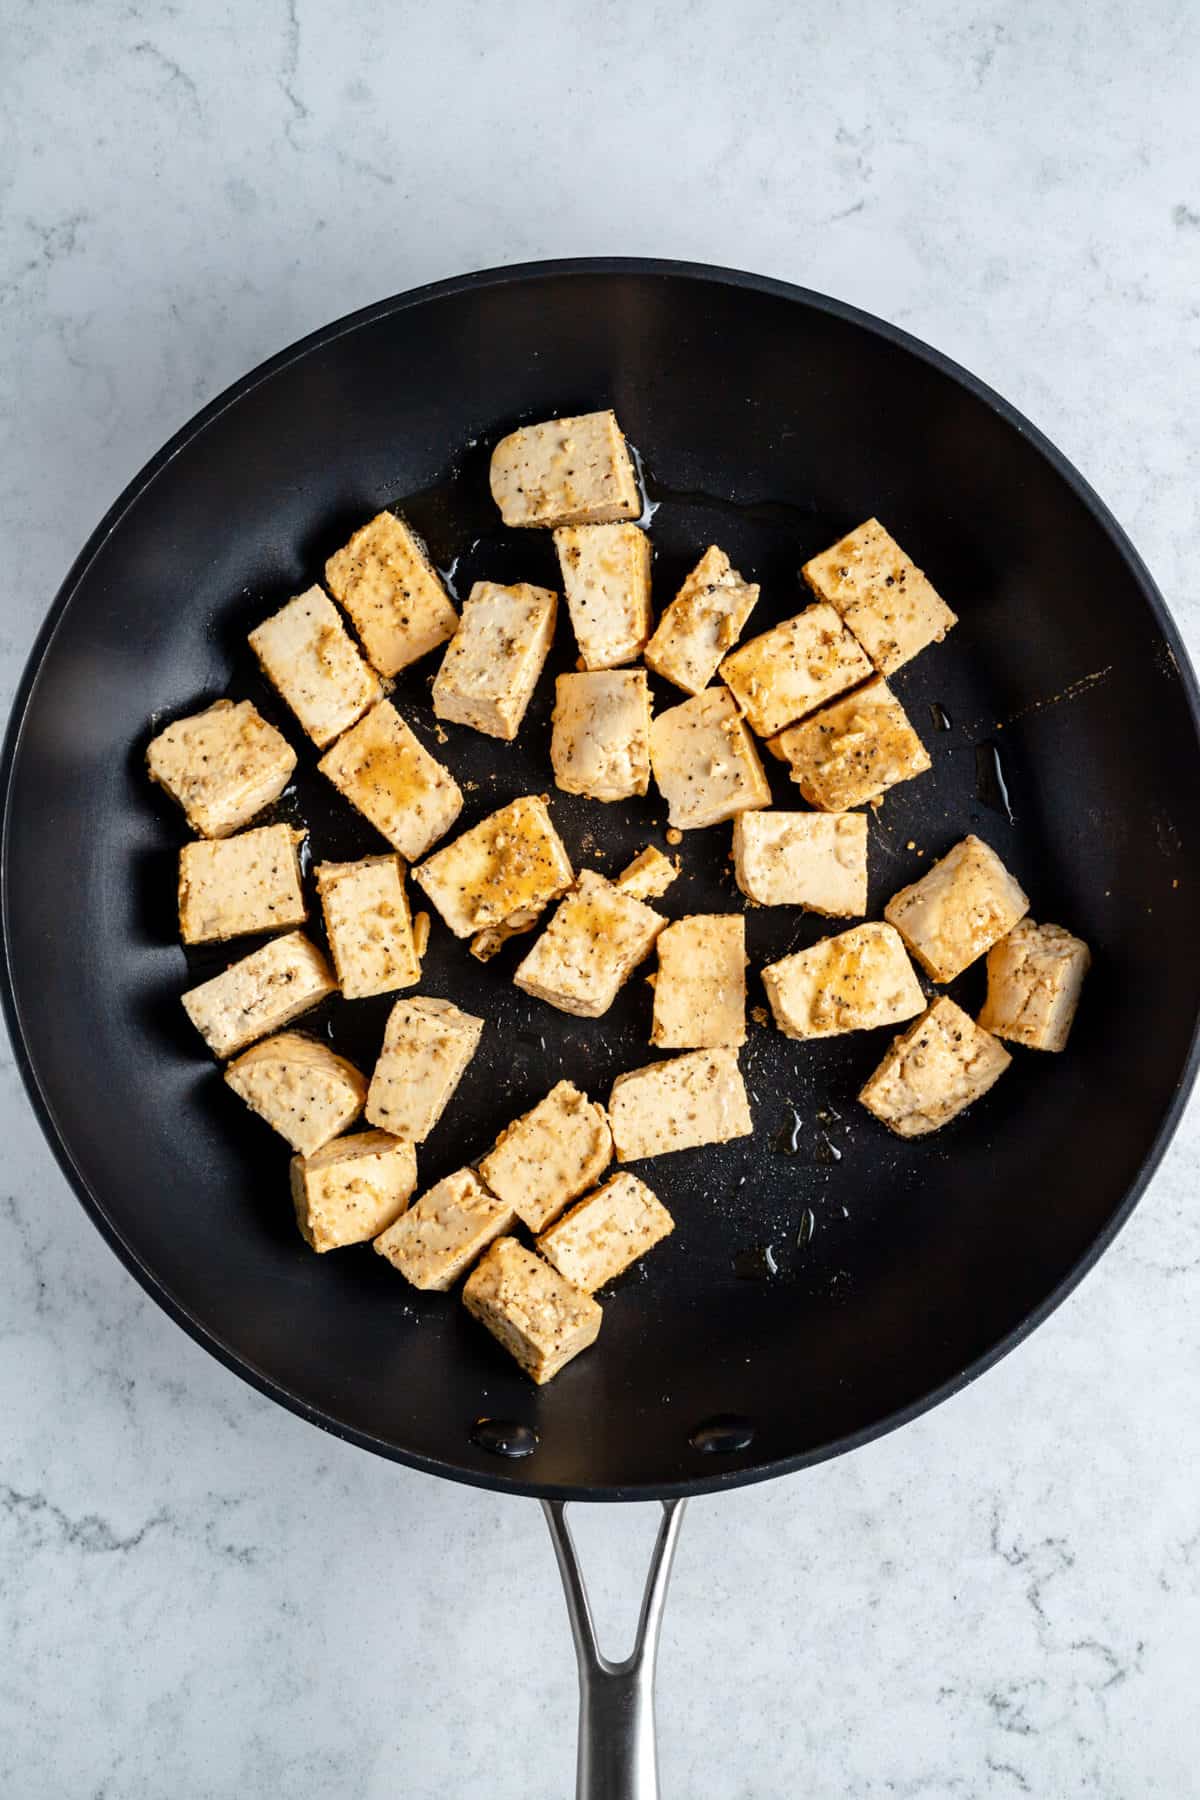 Tofu cubes in a frying pan.